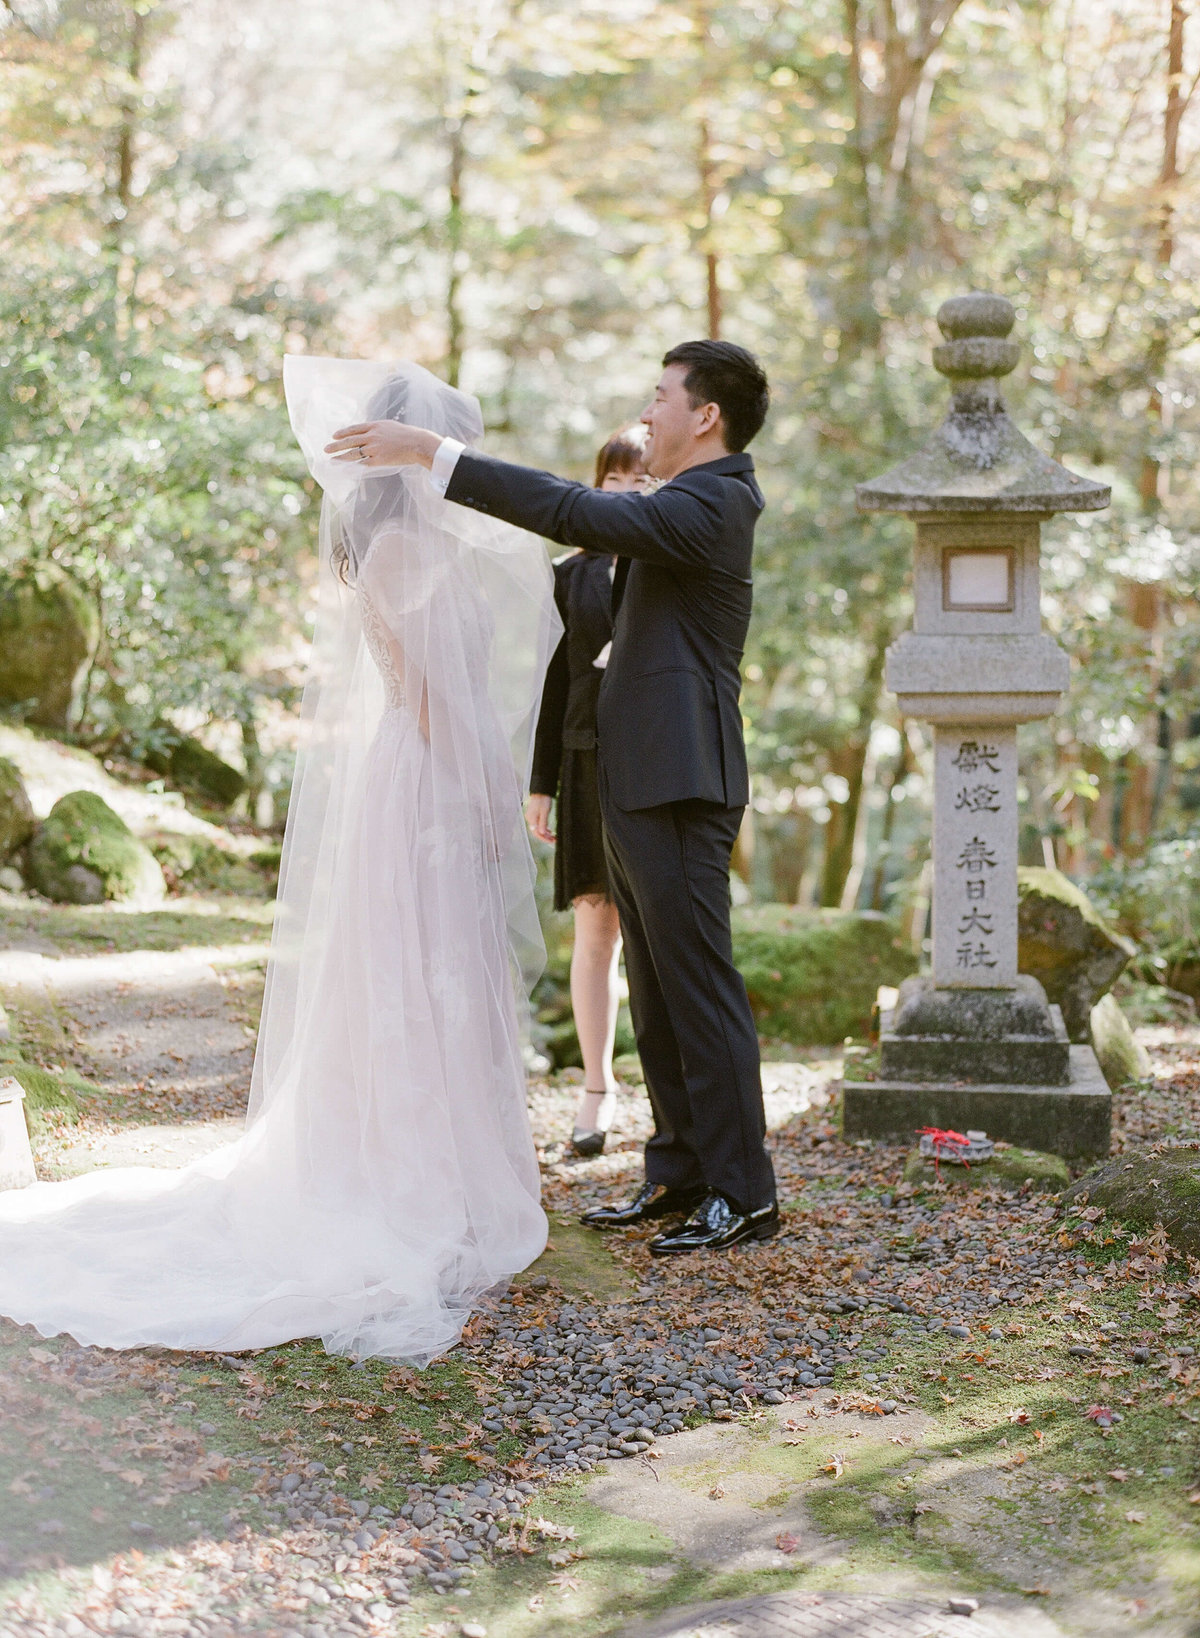 11-KTMerry-weddings-elopement-japan